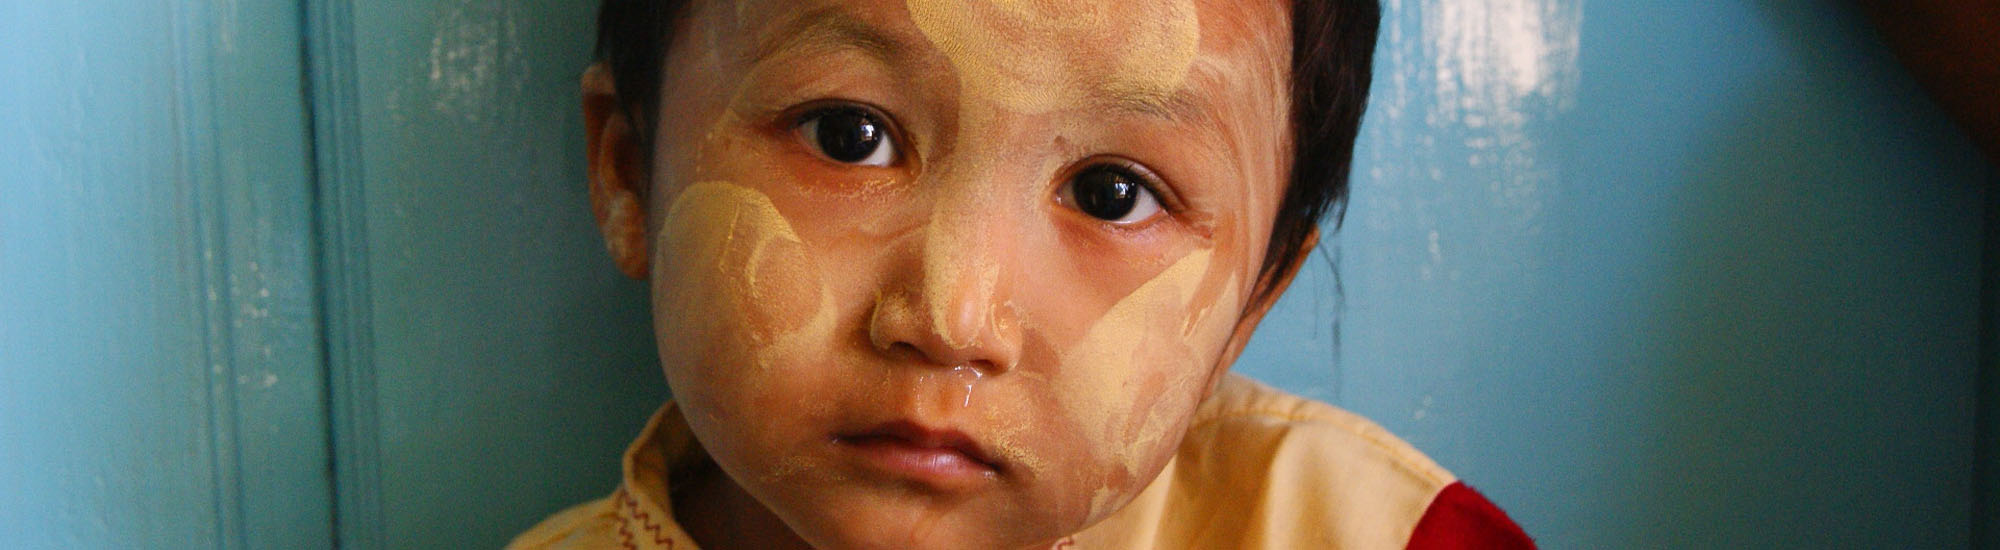 La casa dei bambini orfani e abbandonati | abc - Burmese Children Association ONLUS